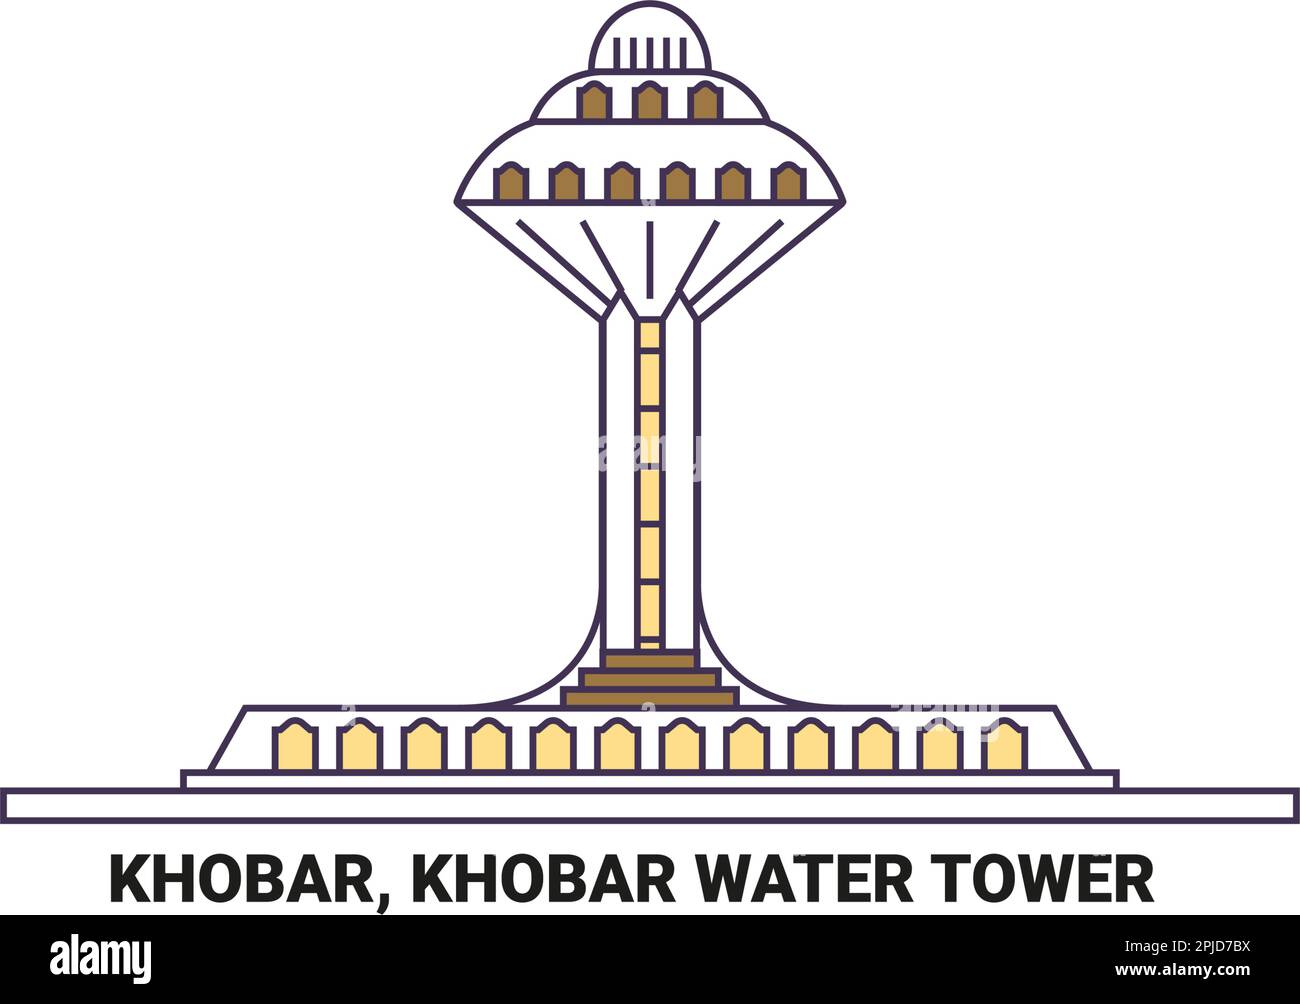 Saudi Arabia, Khobar, Khobar Water Tower, travel landmark vector illustration Stock Vector